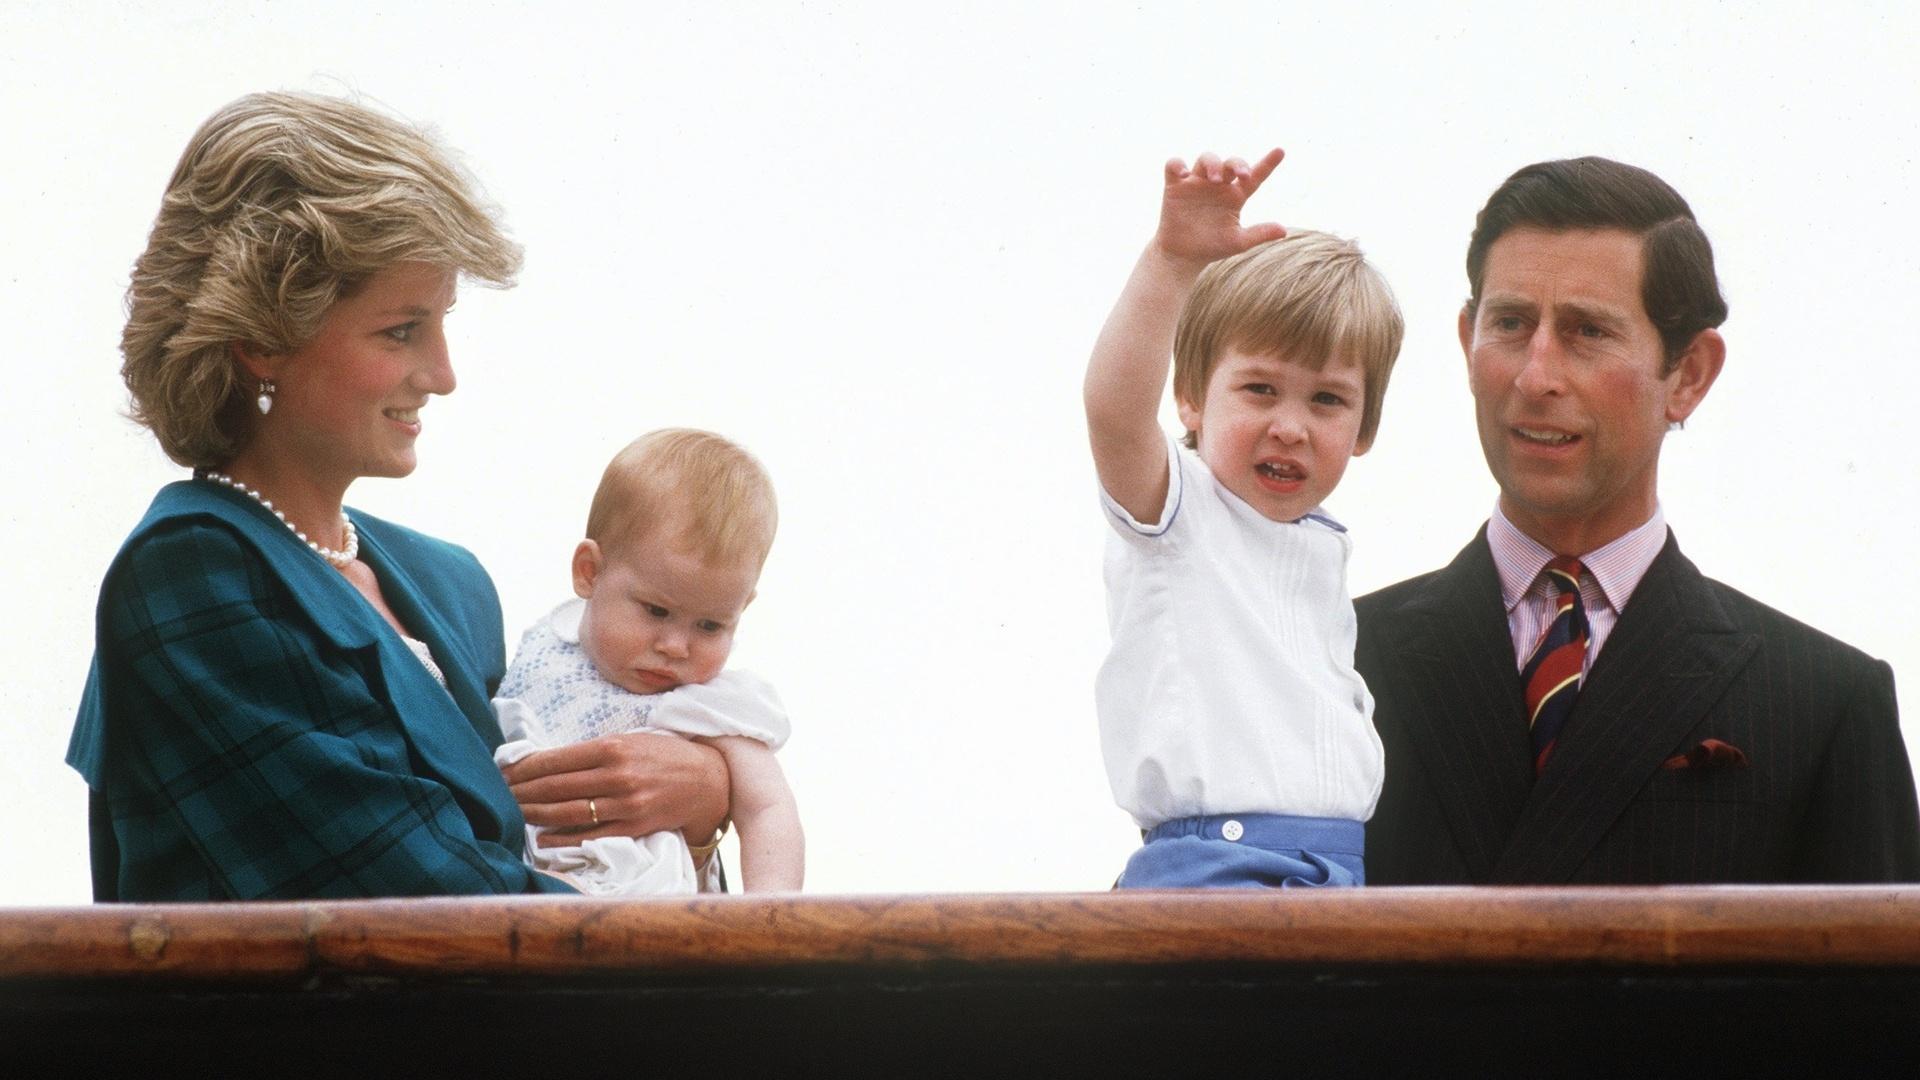 Princess Diana, Prince Charles, Prince William and Prince Harry